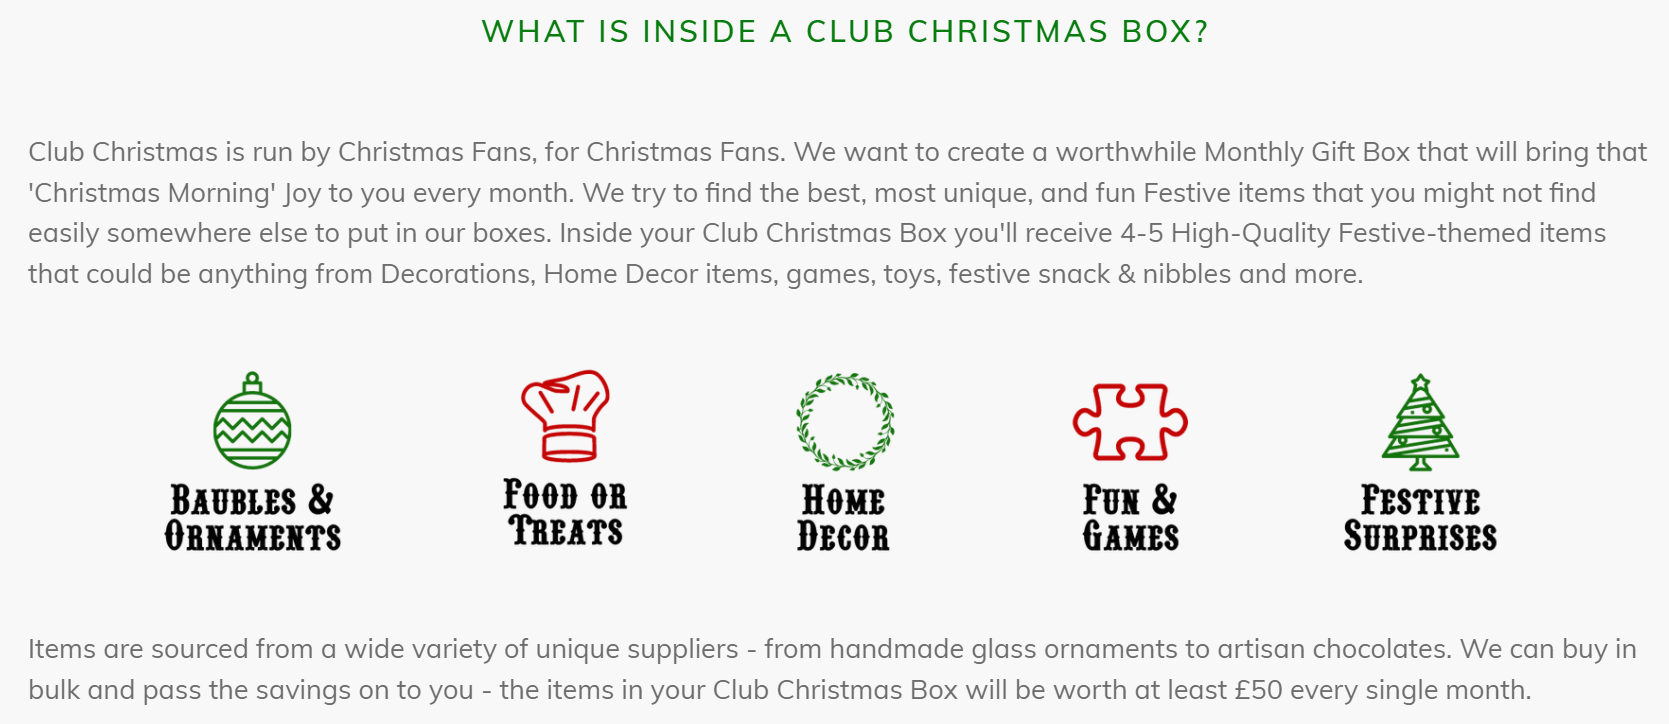 What's inside a Club Christmas Box